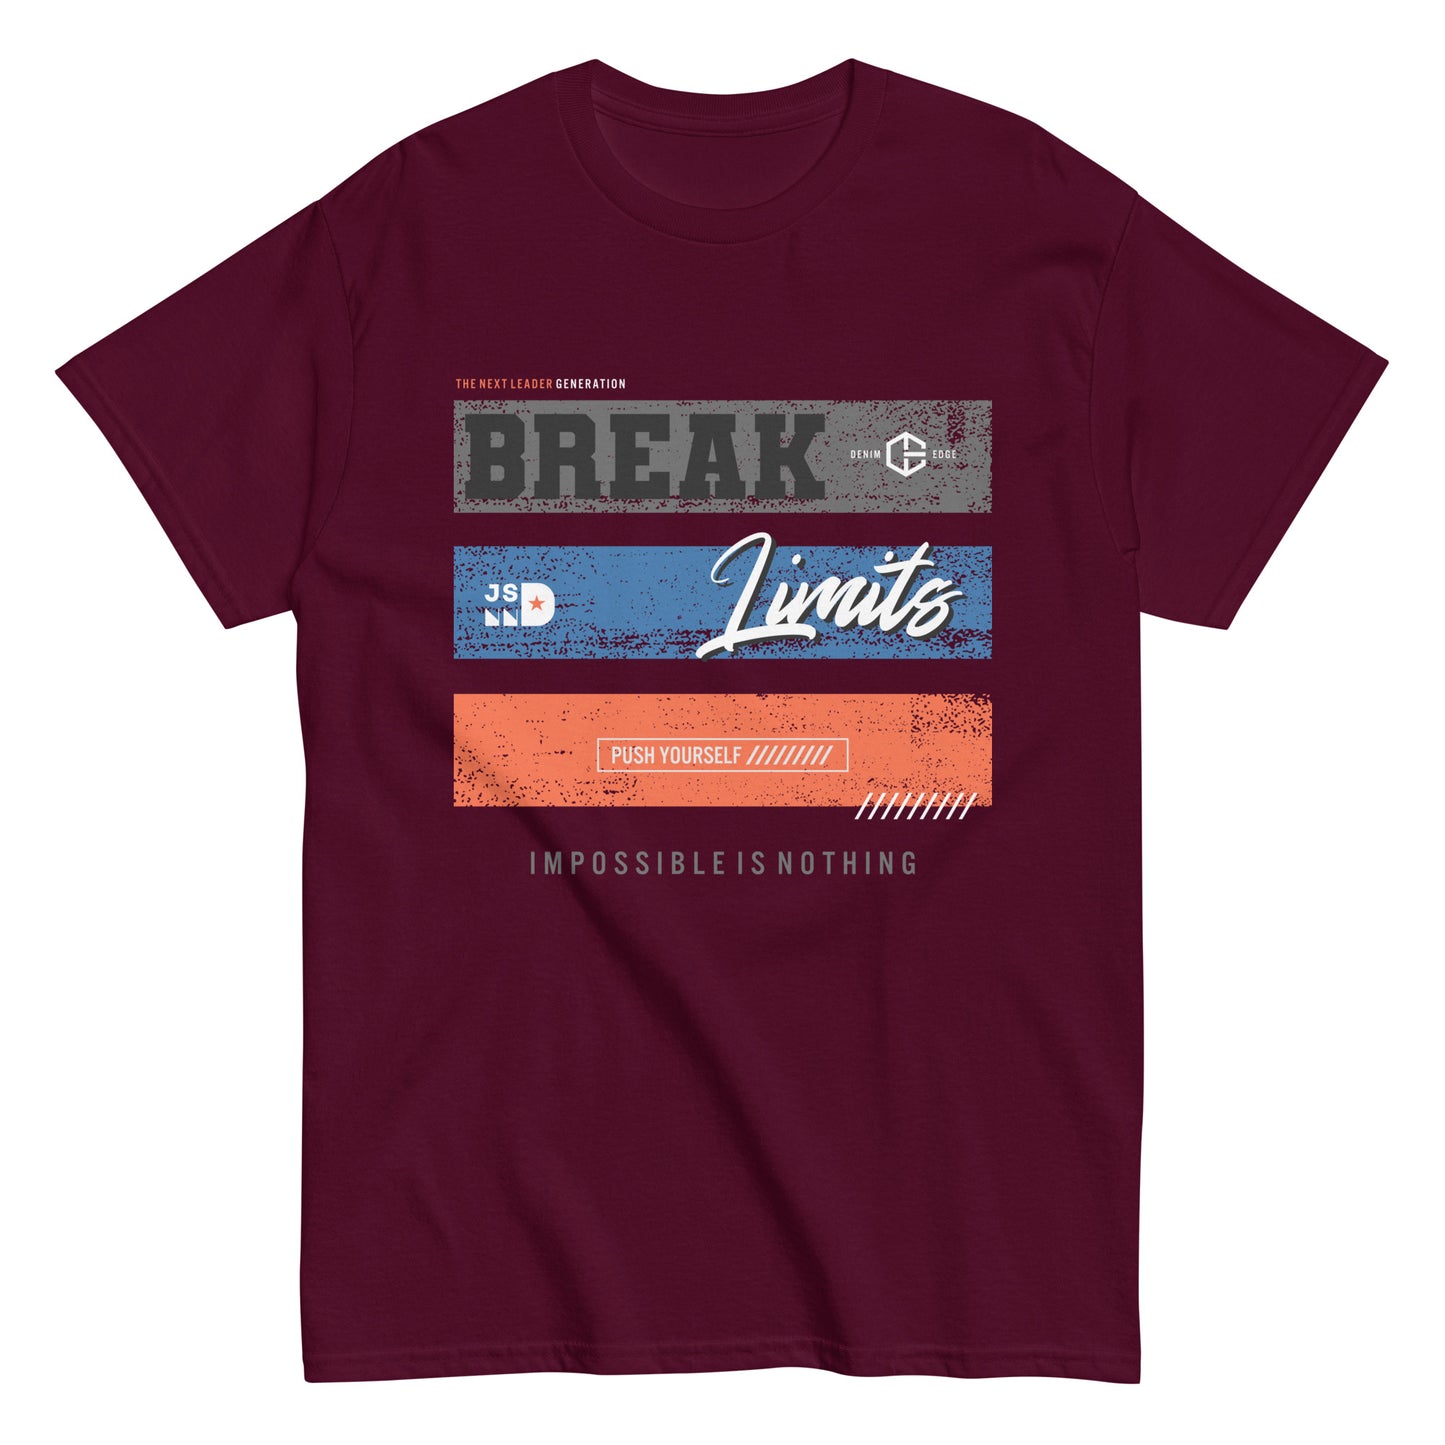 Break Limits T-shirt